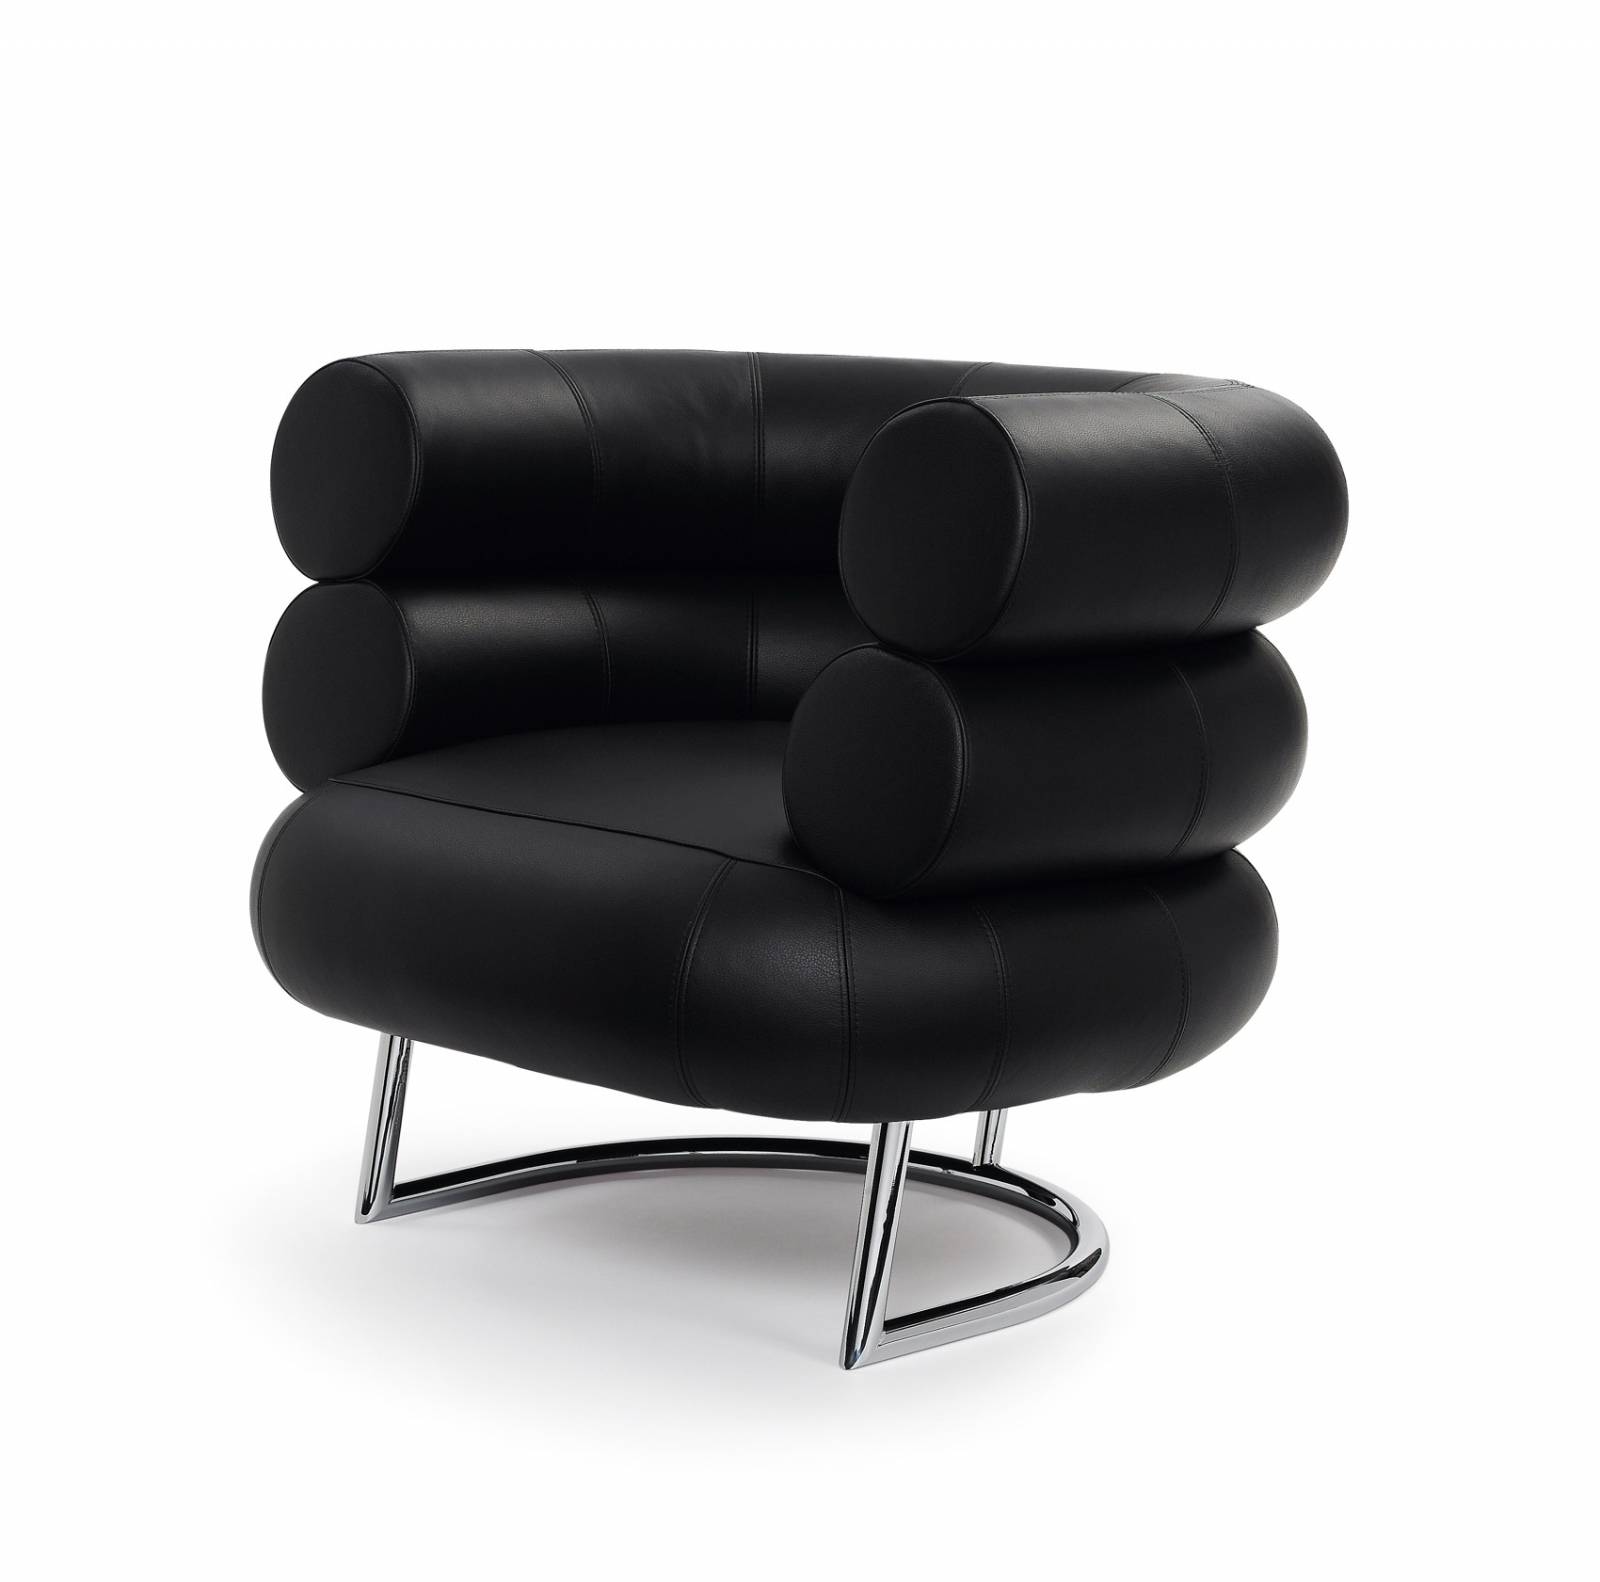 Fotel Bibendum, cena od 4050 euro (Fot. Mood Design/Classicon)